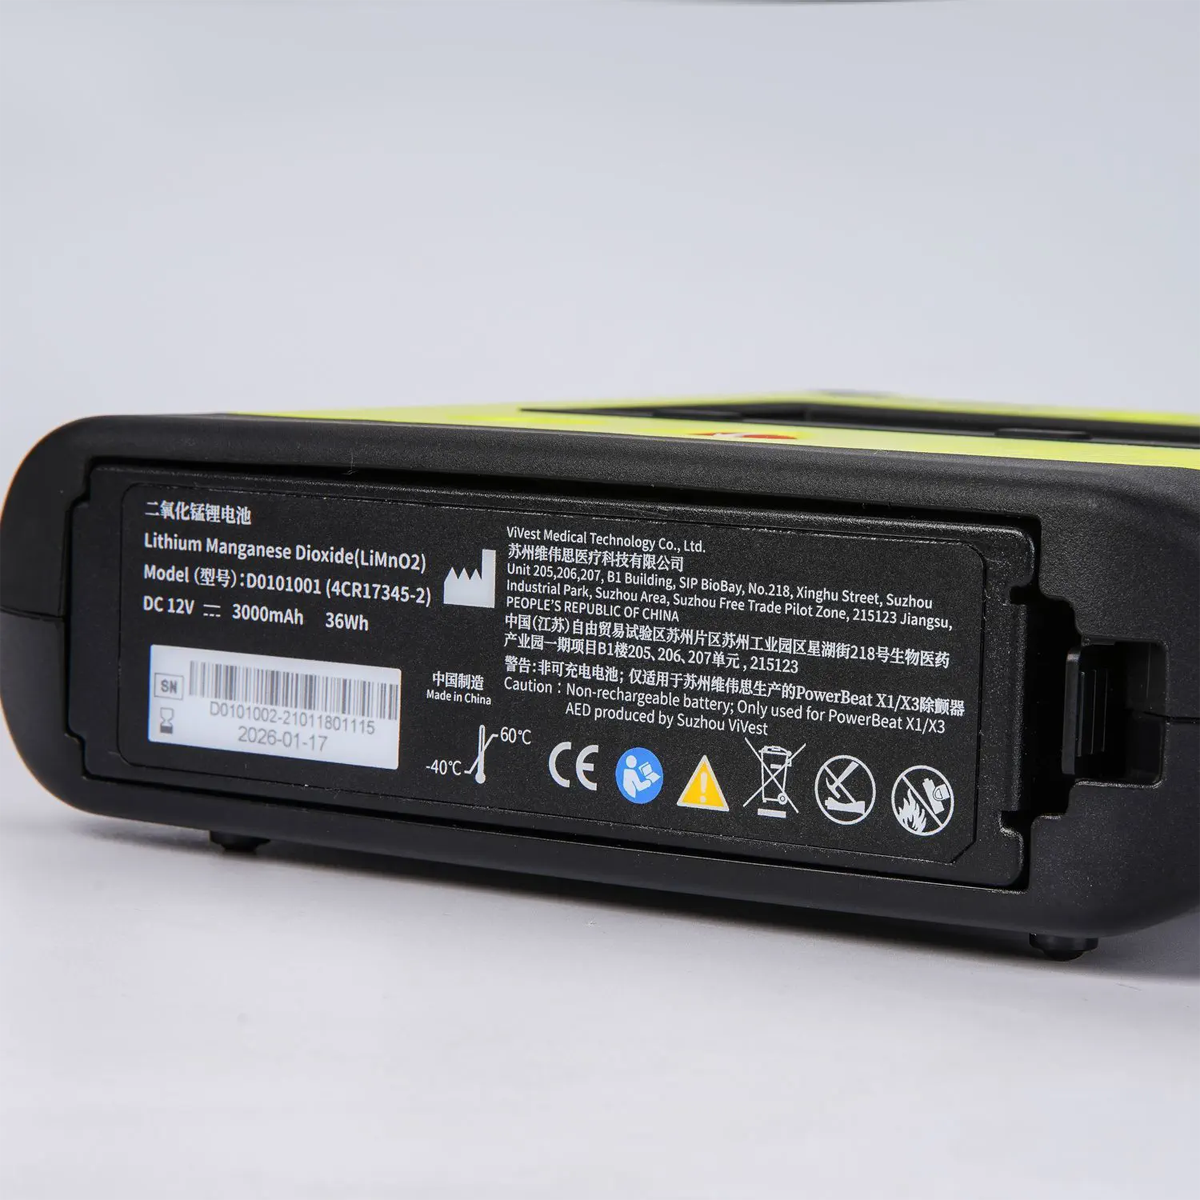 ViVest PowerBeat X1 Defibrillator